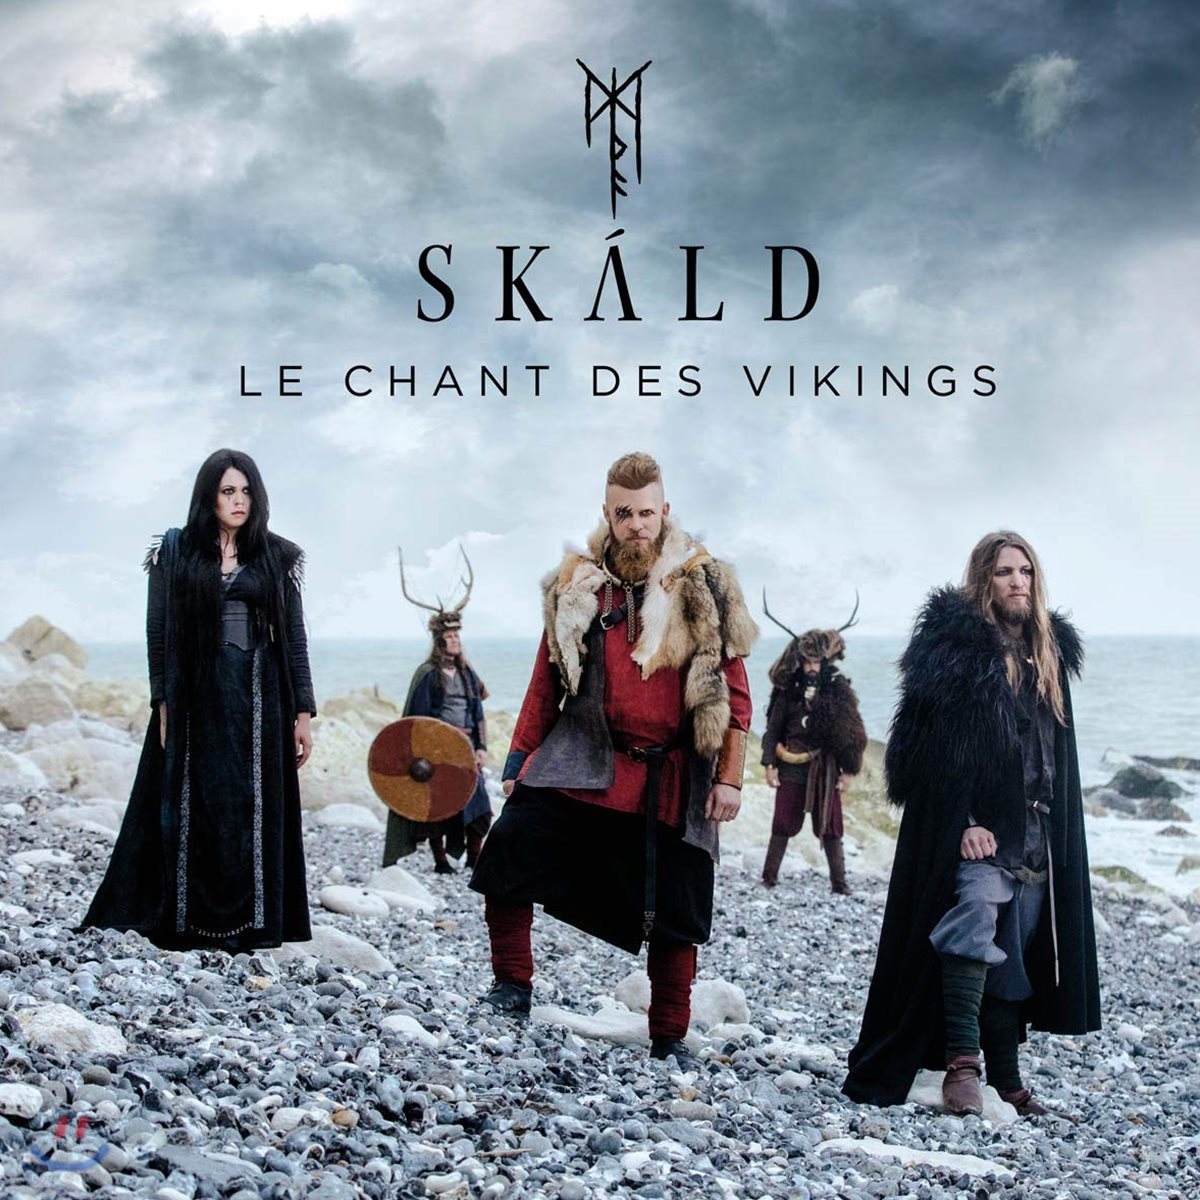 SKALD 북유럽 바이킹을 주제로 한 음악 (Vikings Chant) 스칼드